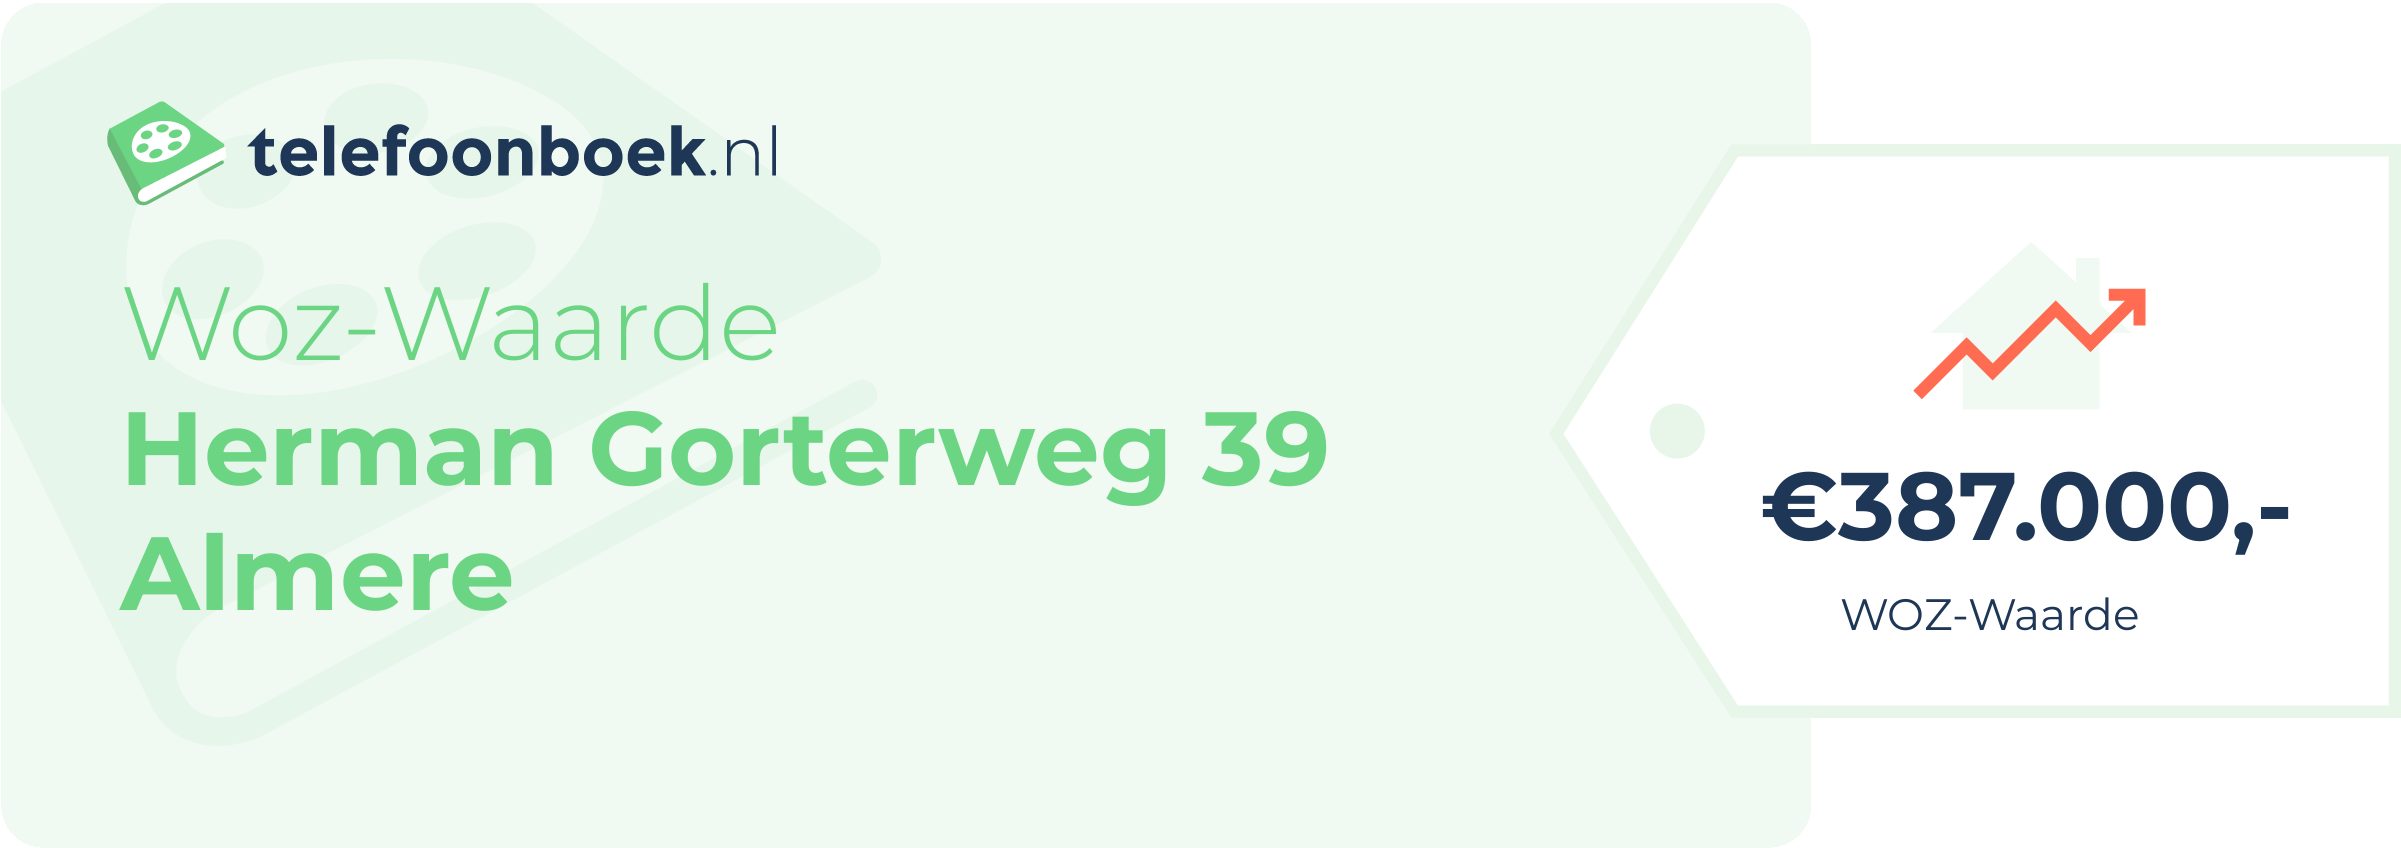 WOZ-waarde Herman Gorterweg 39 Almere